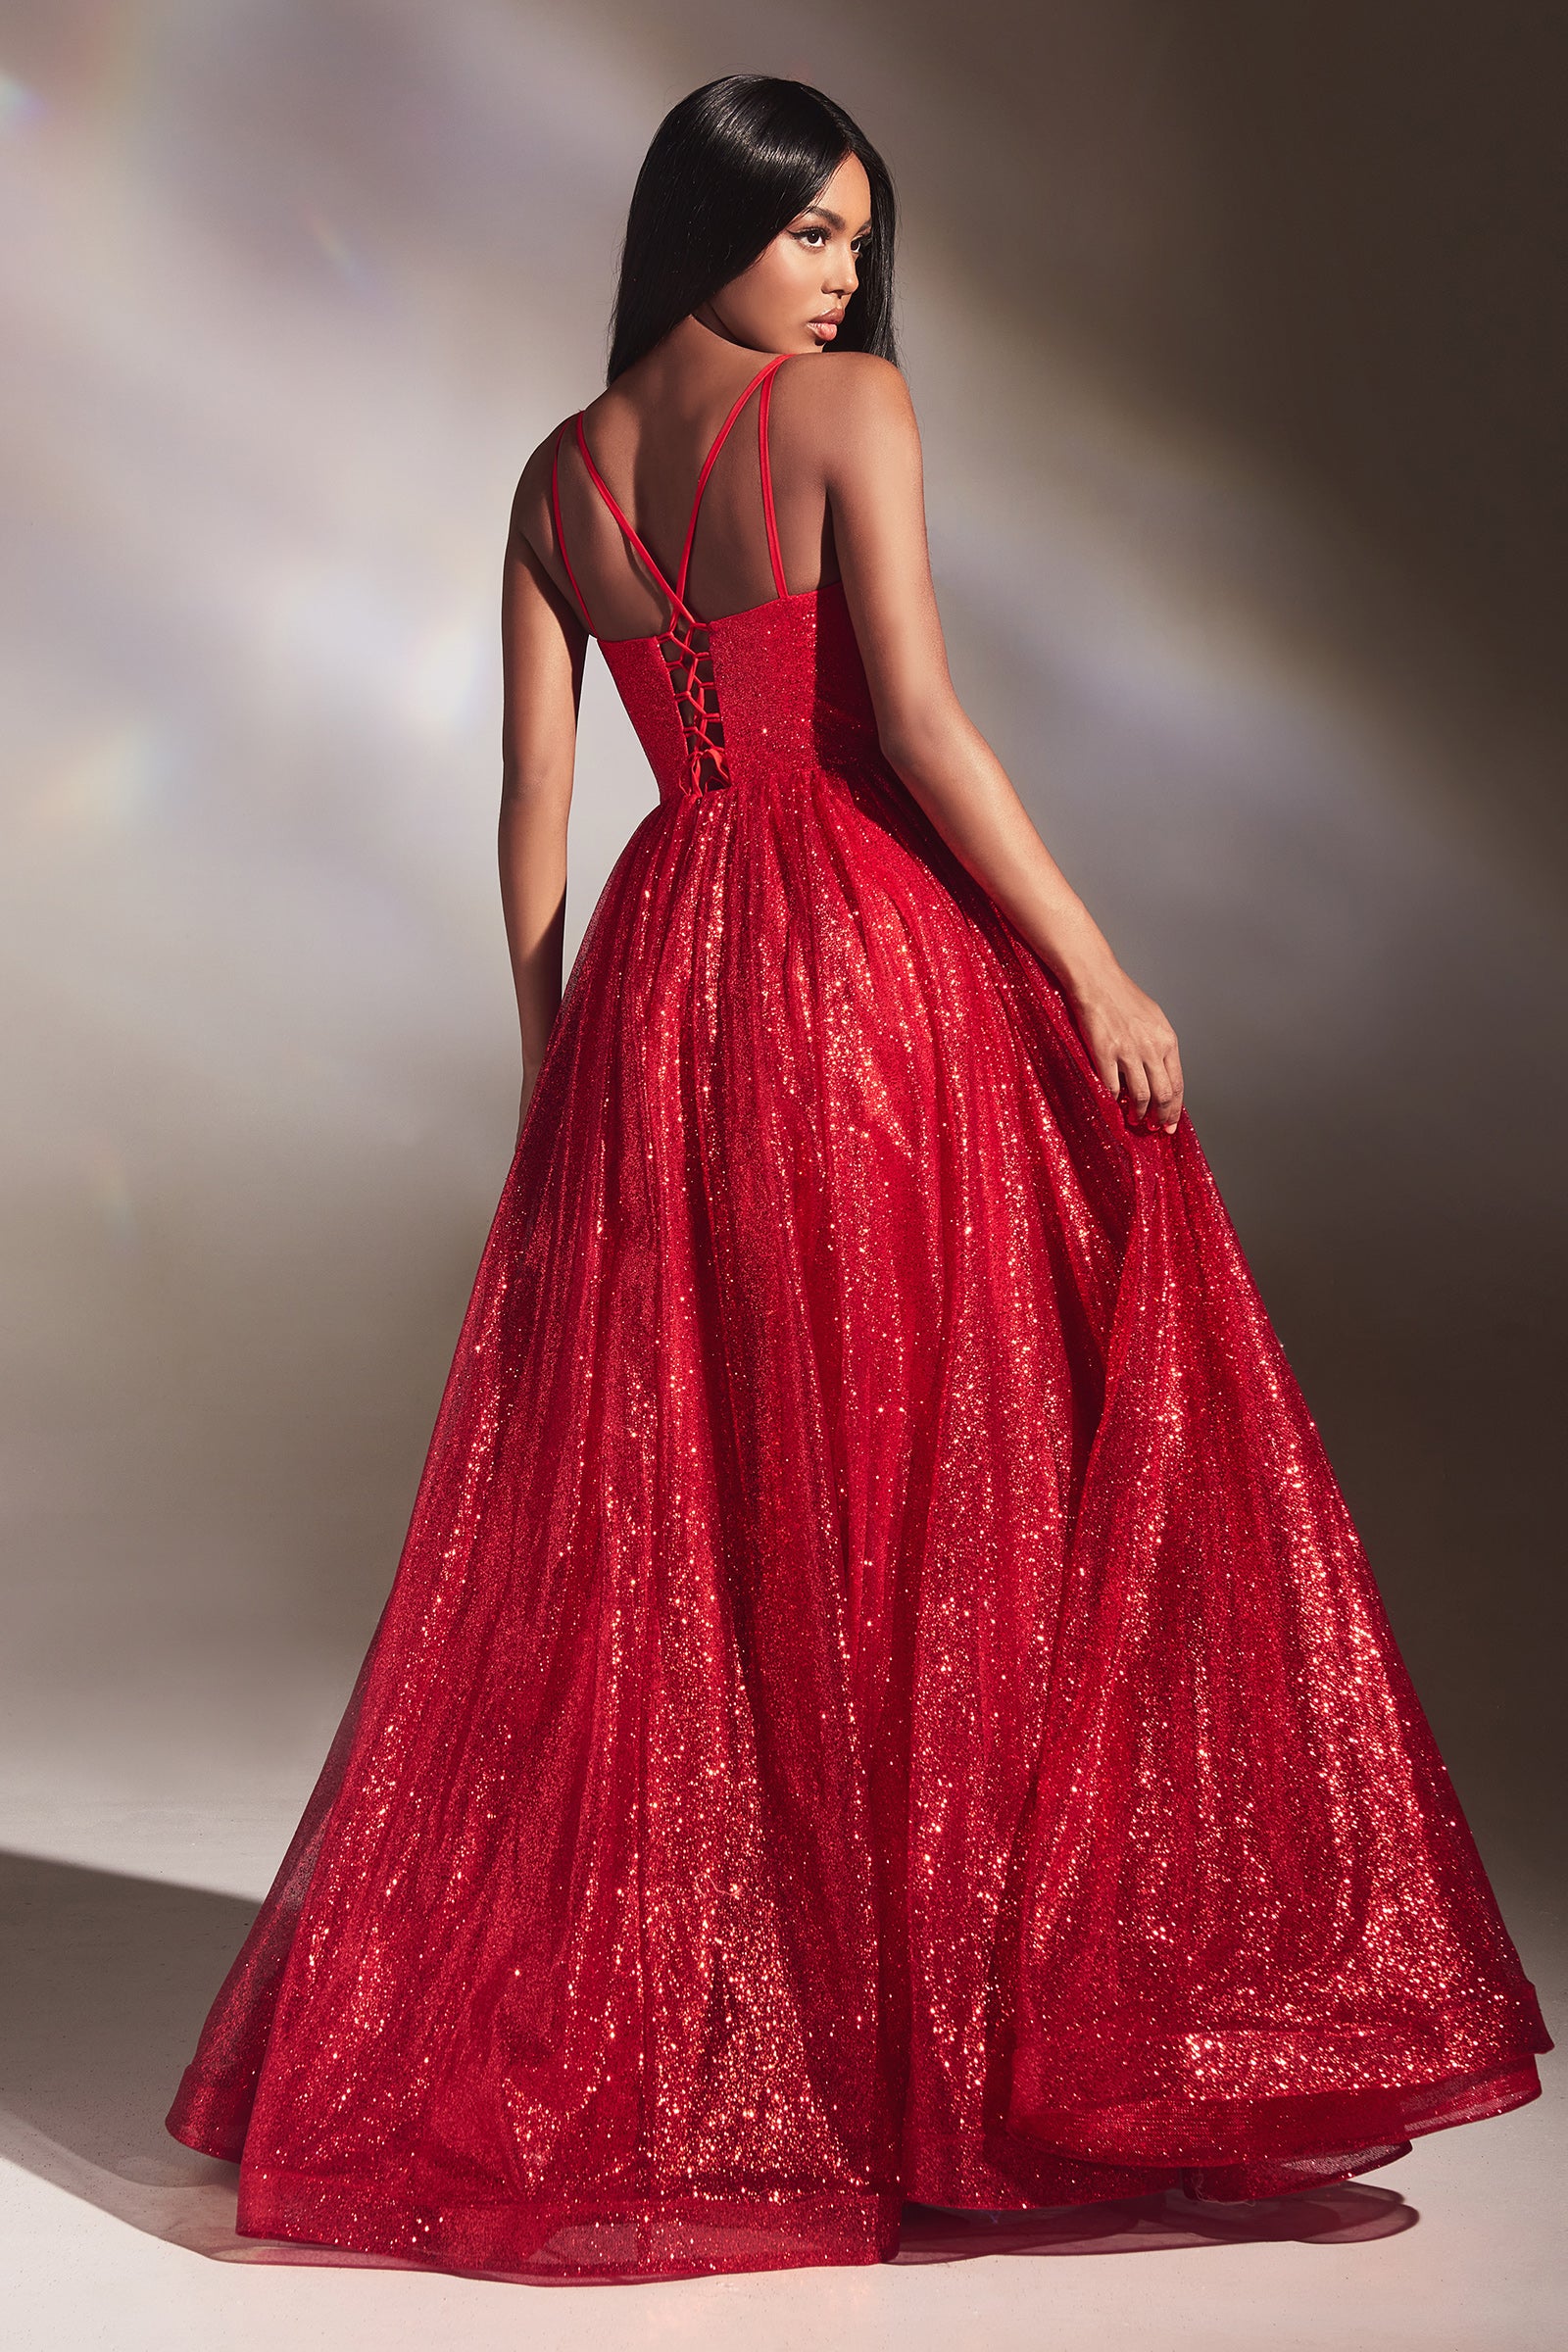 81. Red Cinderella style dress | SantoriniDress